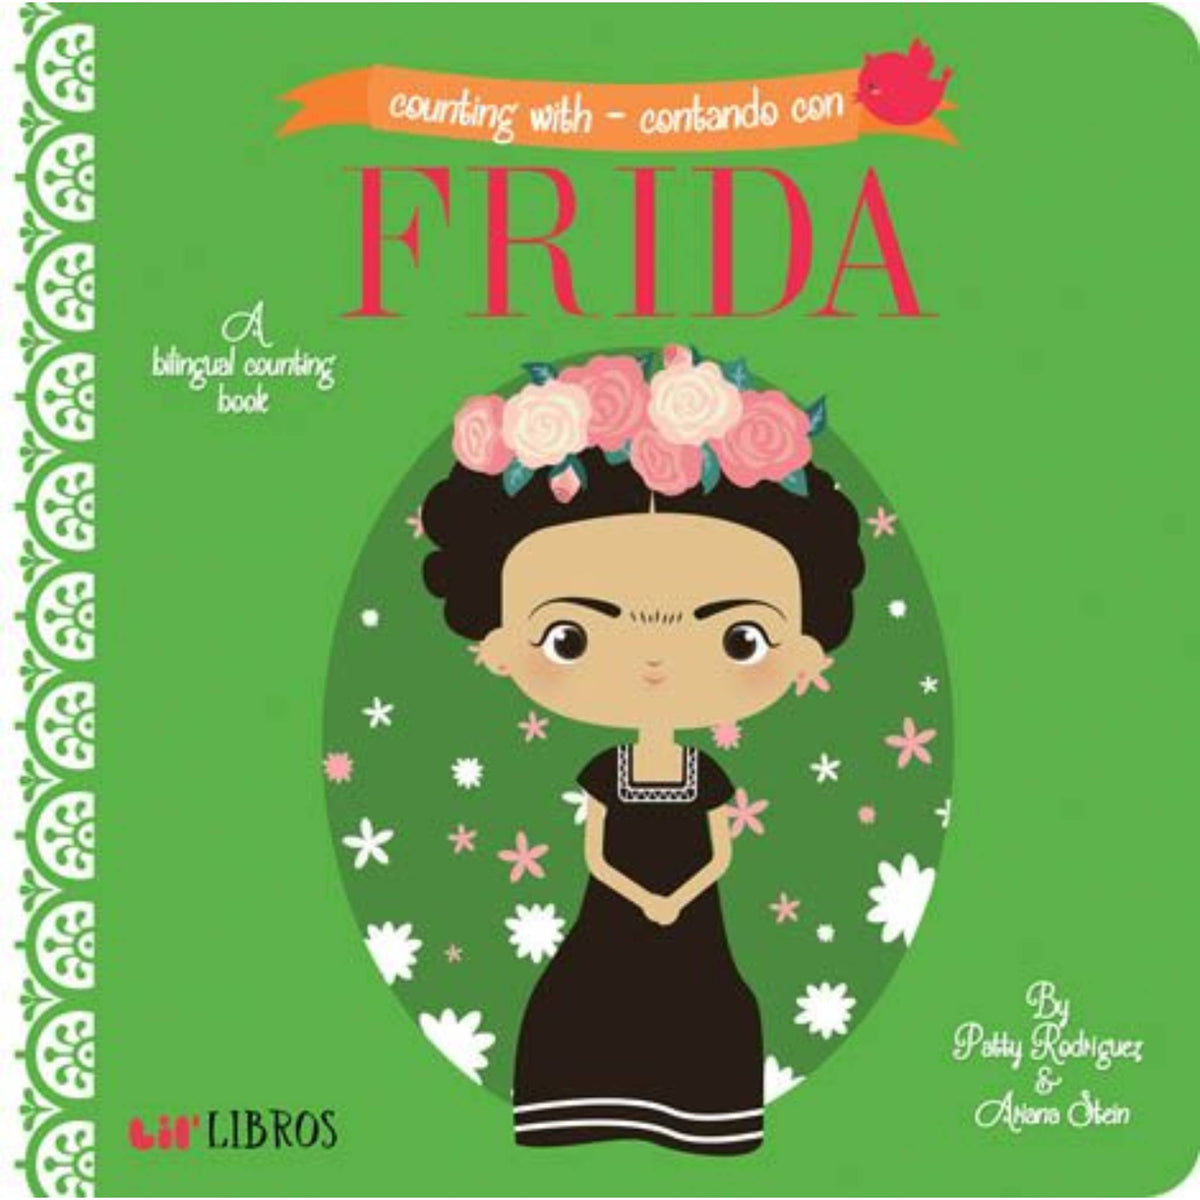 Counting With - Contando Con Frida Book